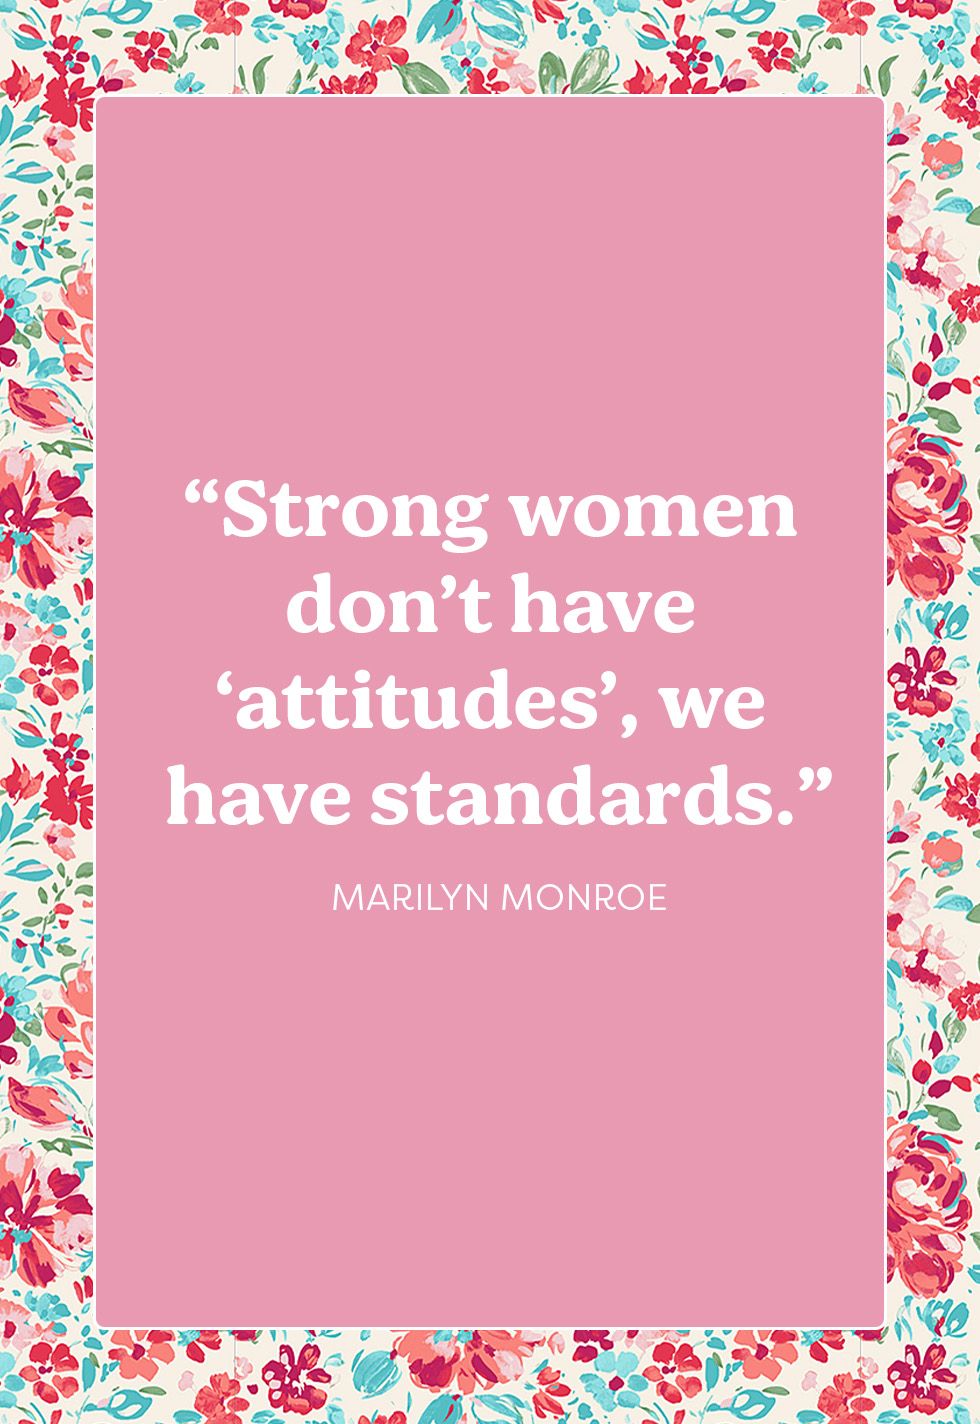 Happy International Women's Day! Today we celebrate the strength